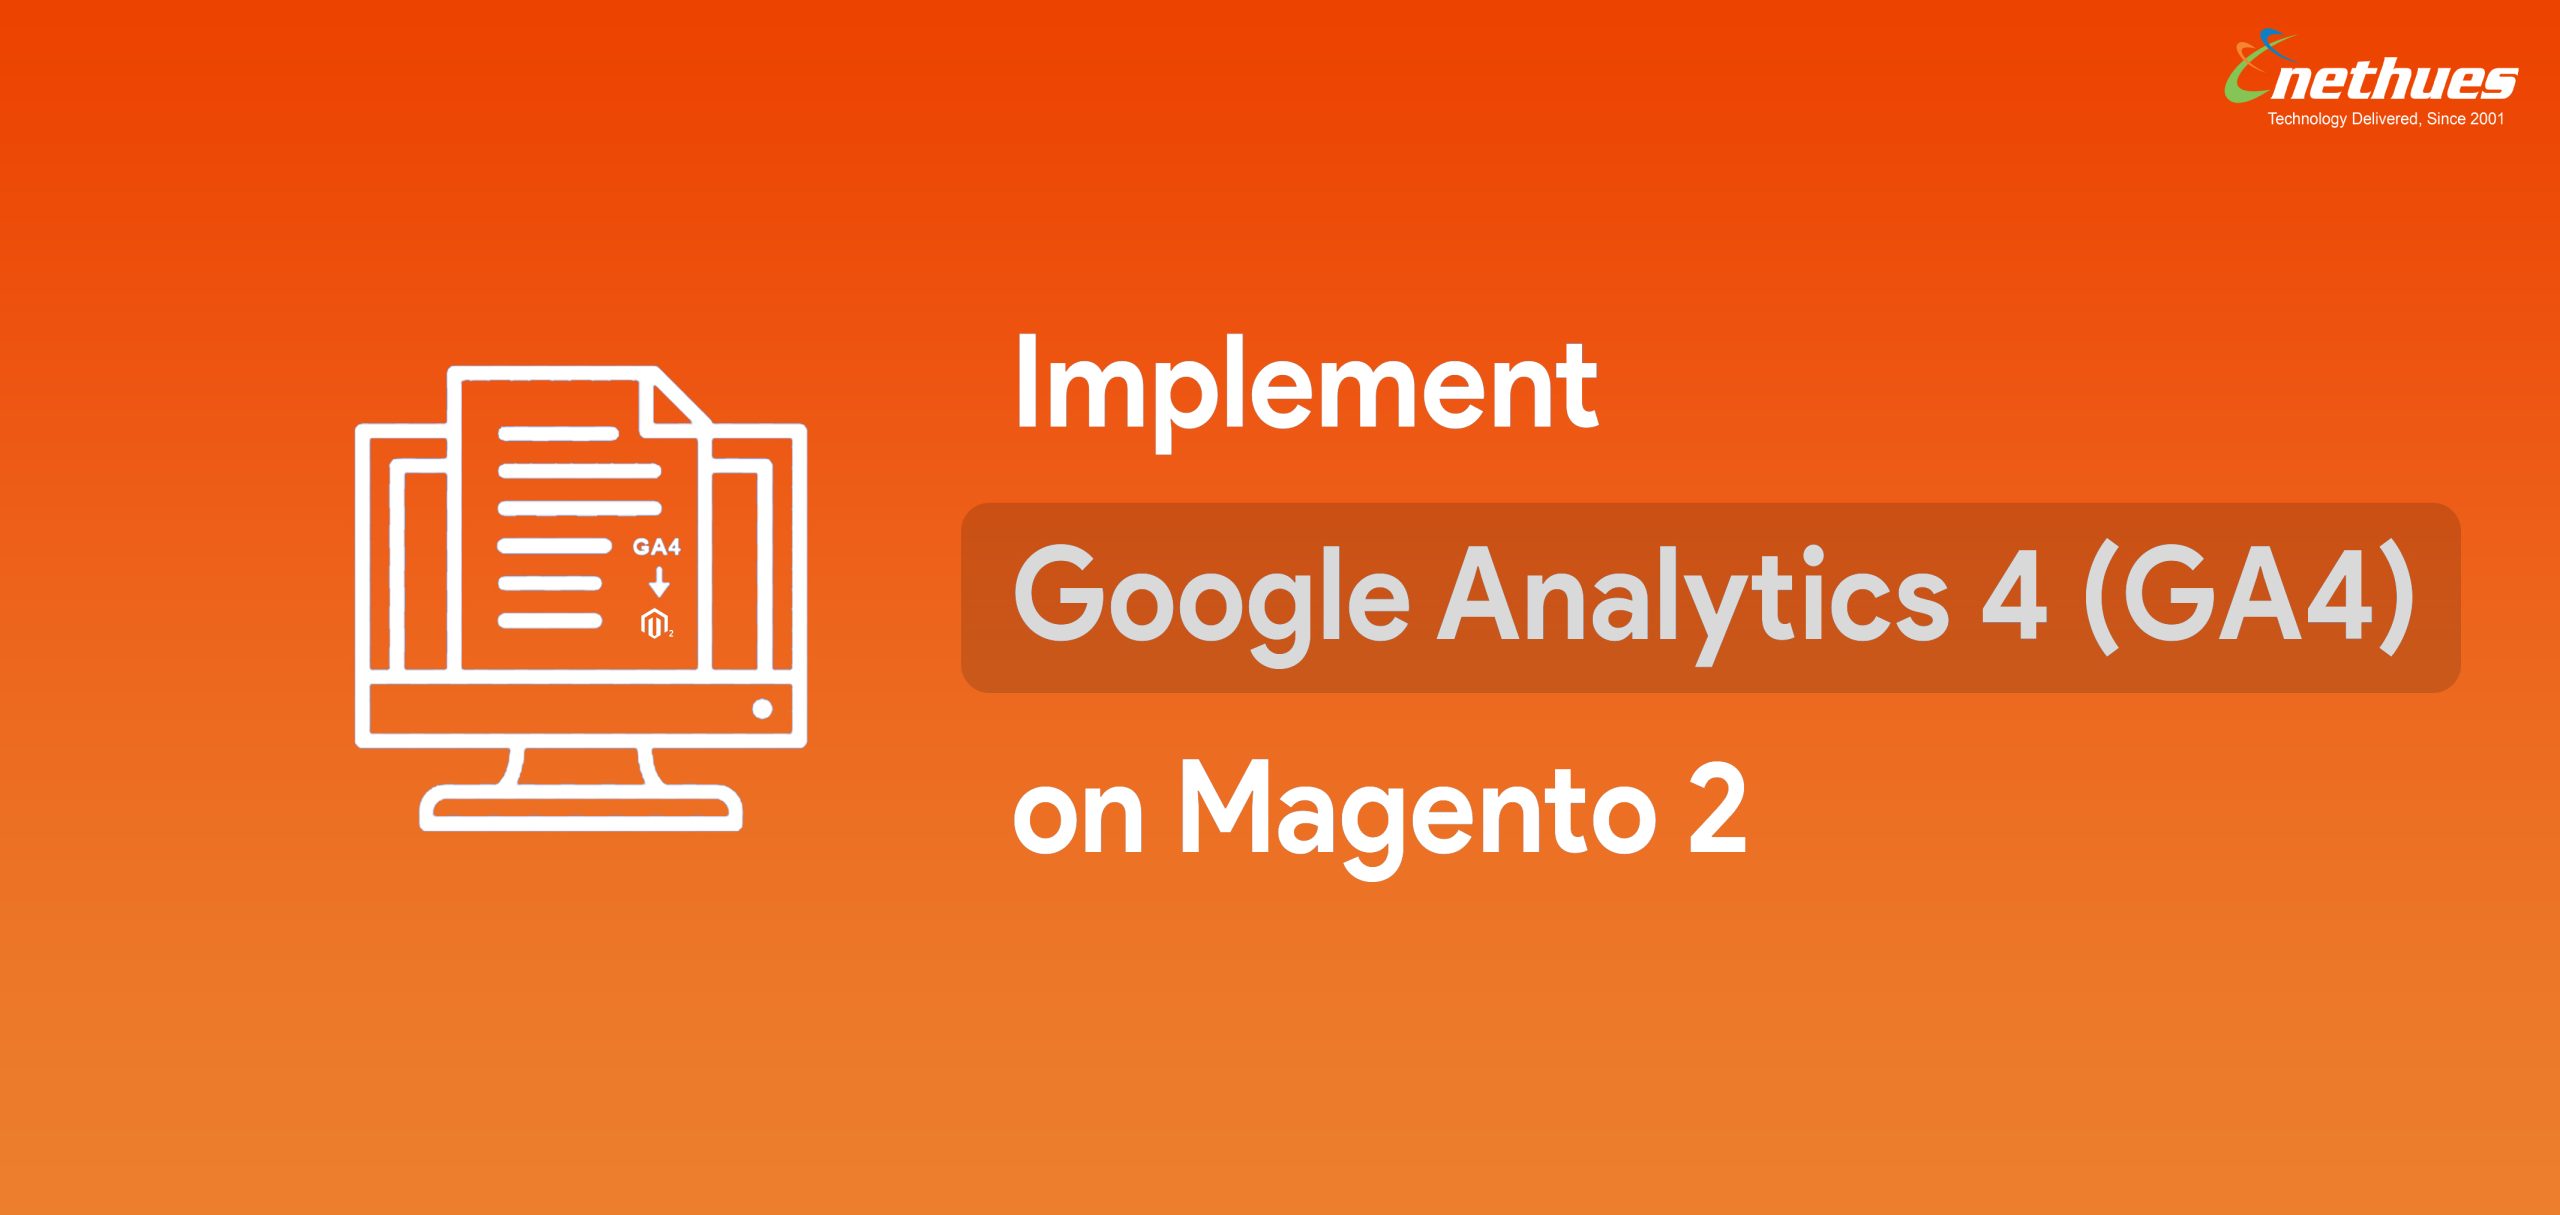 Implement Google Analytics 4 (GA4) on Magento 2